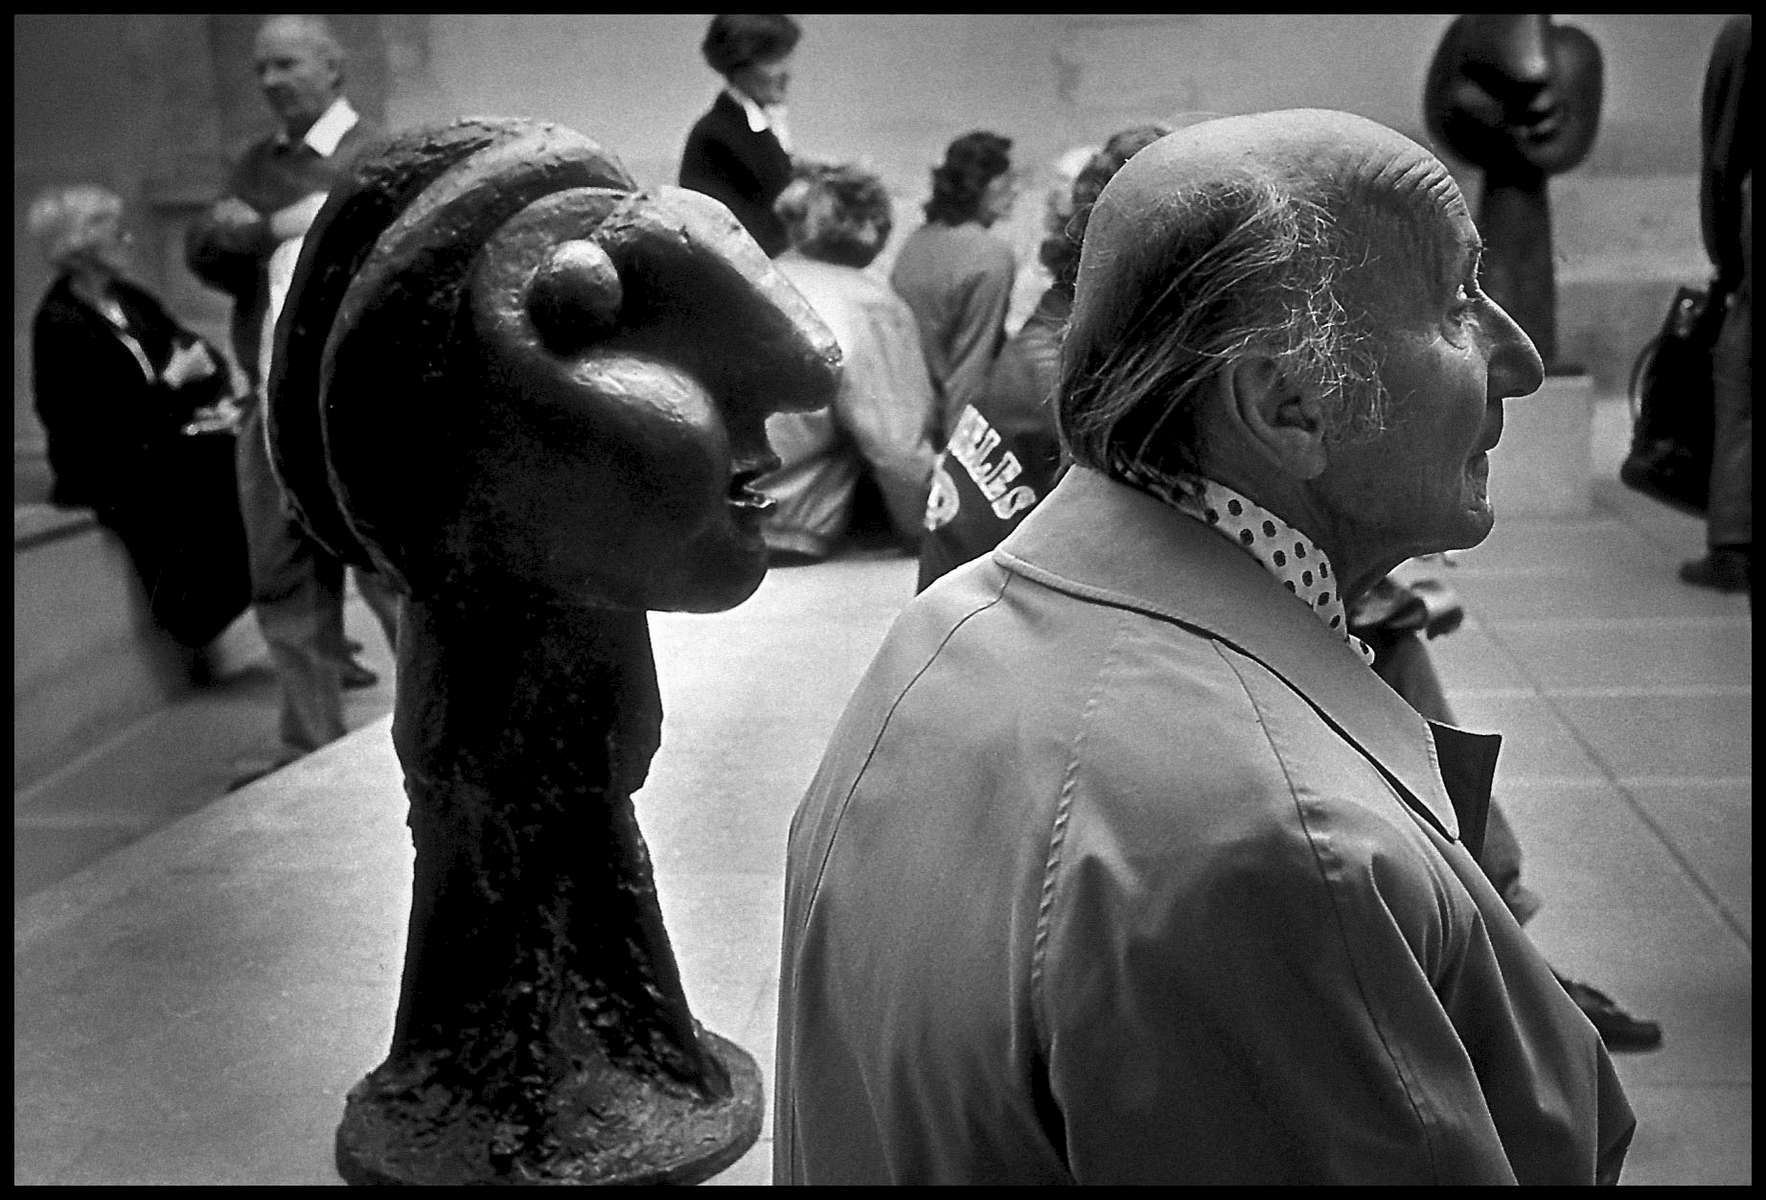 Musee Picasso, Paris